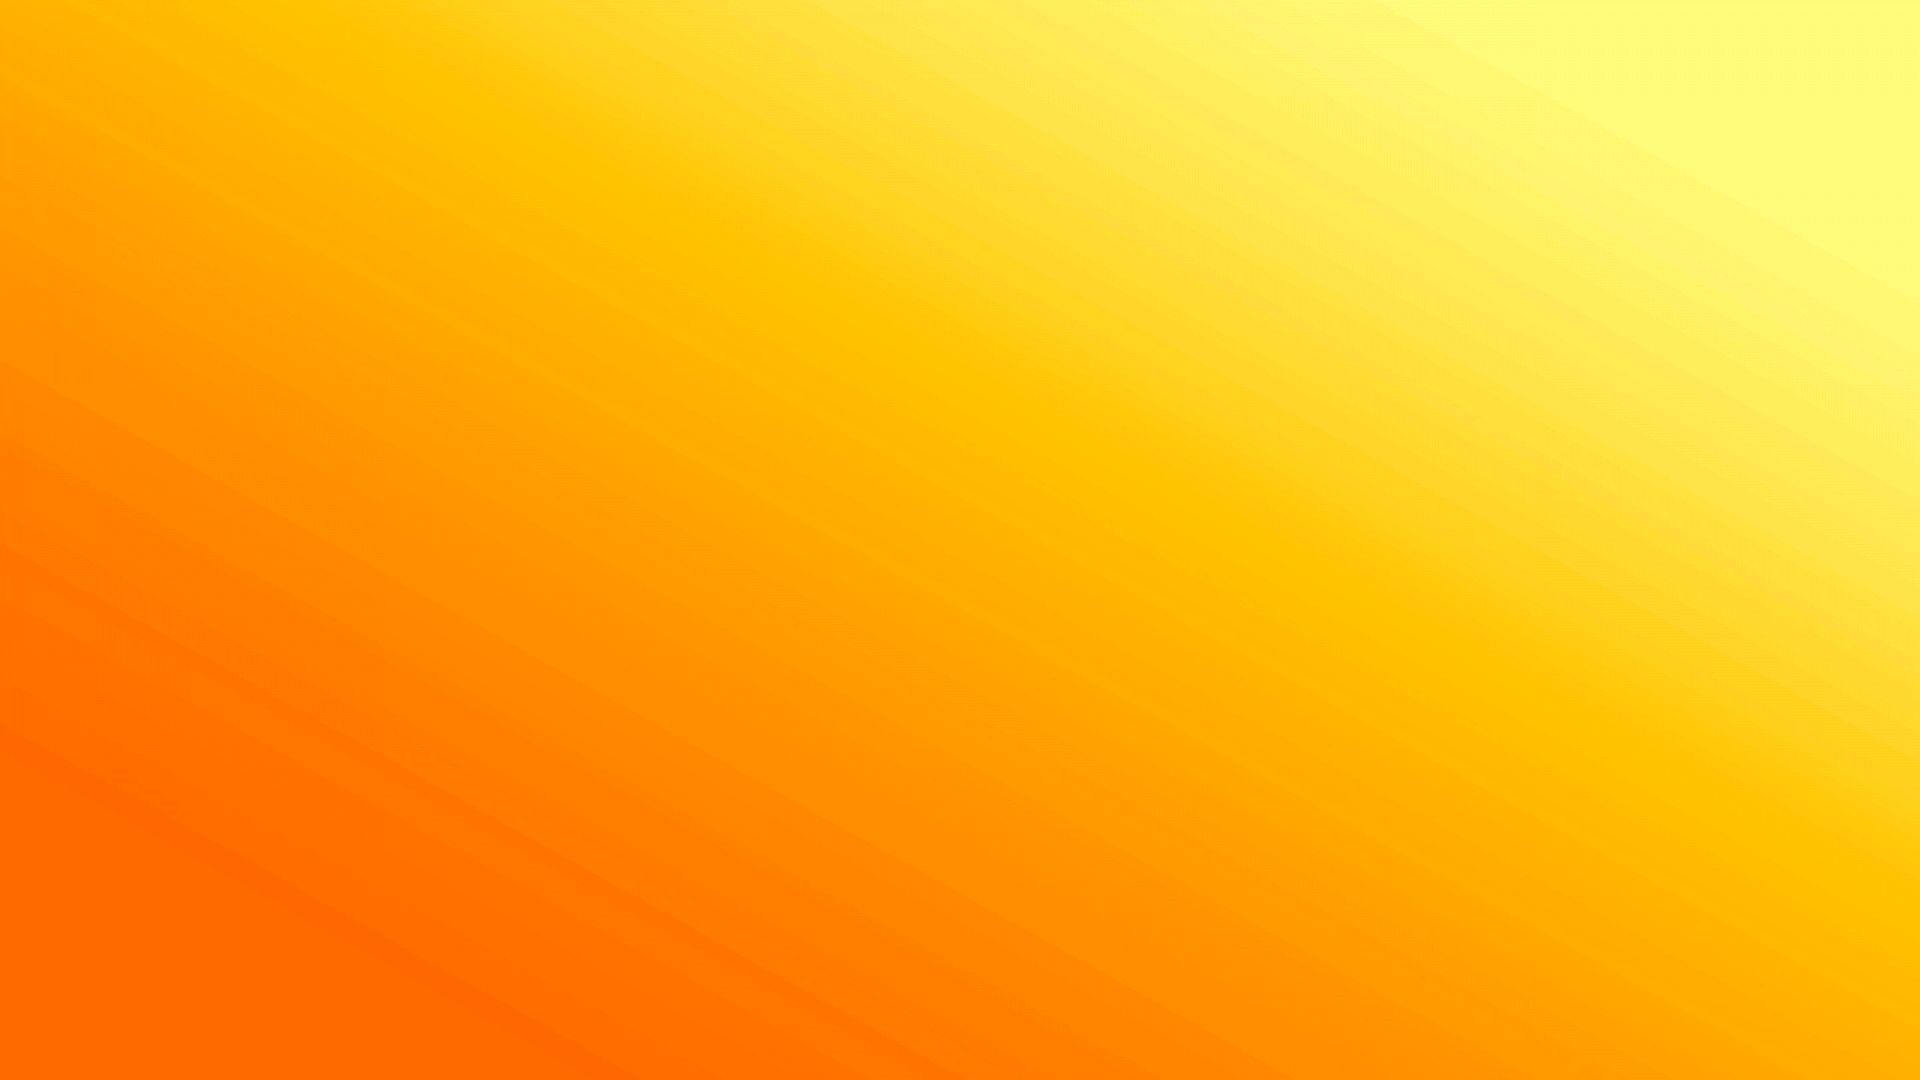 Orange And White Free Desktop Wallpaper